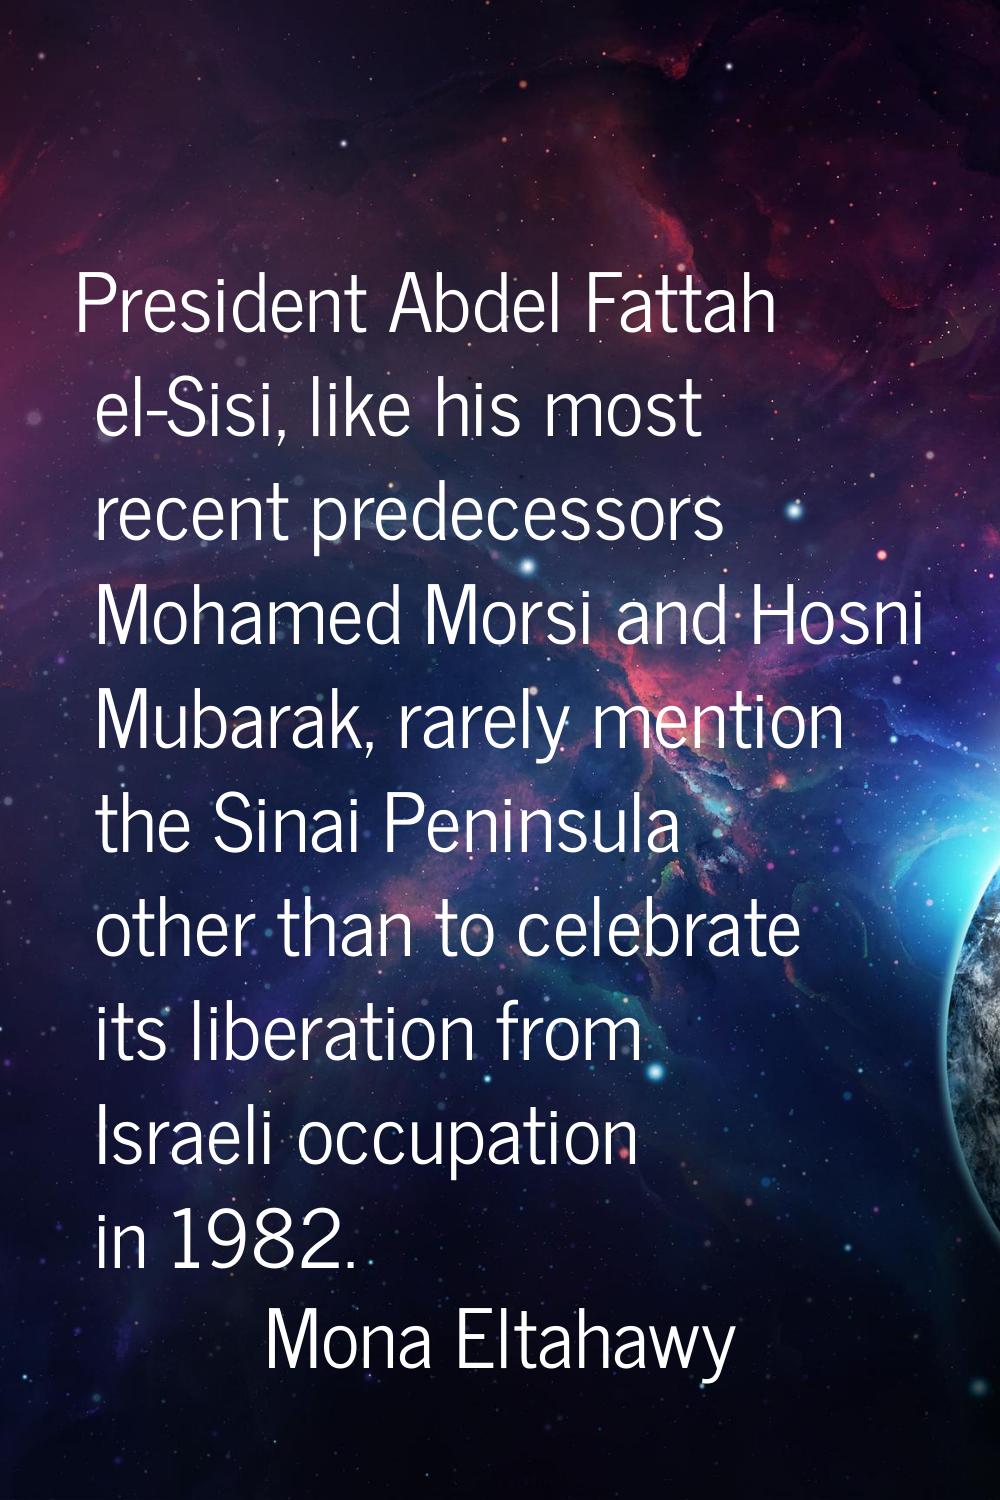 President Abdel Fattah el-Sisi, like his most recent predecessors Mohamed Morsi and Hosni Mubarak, 